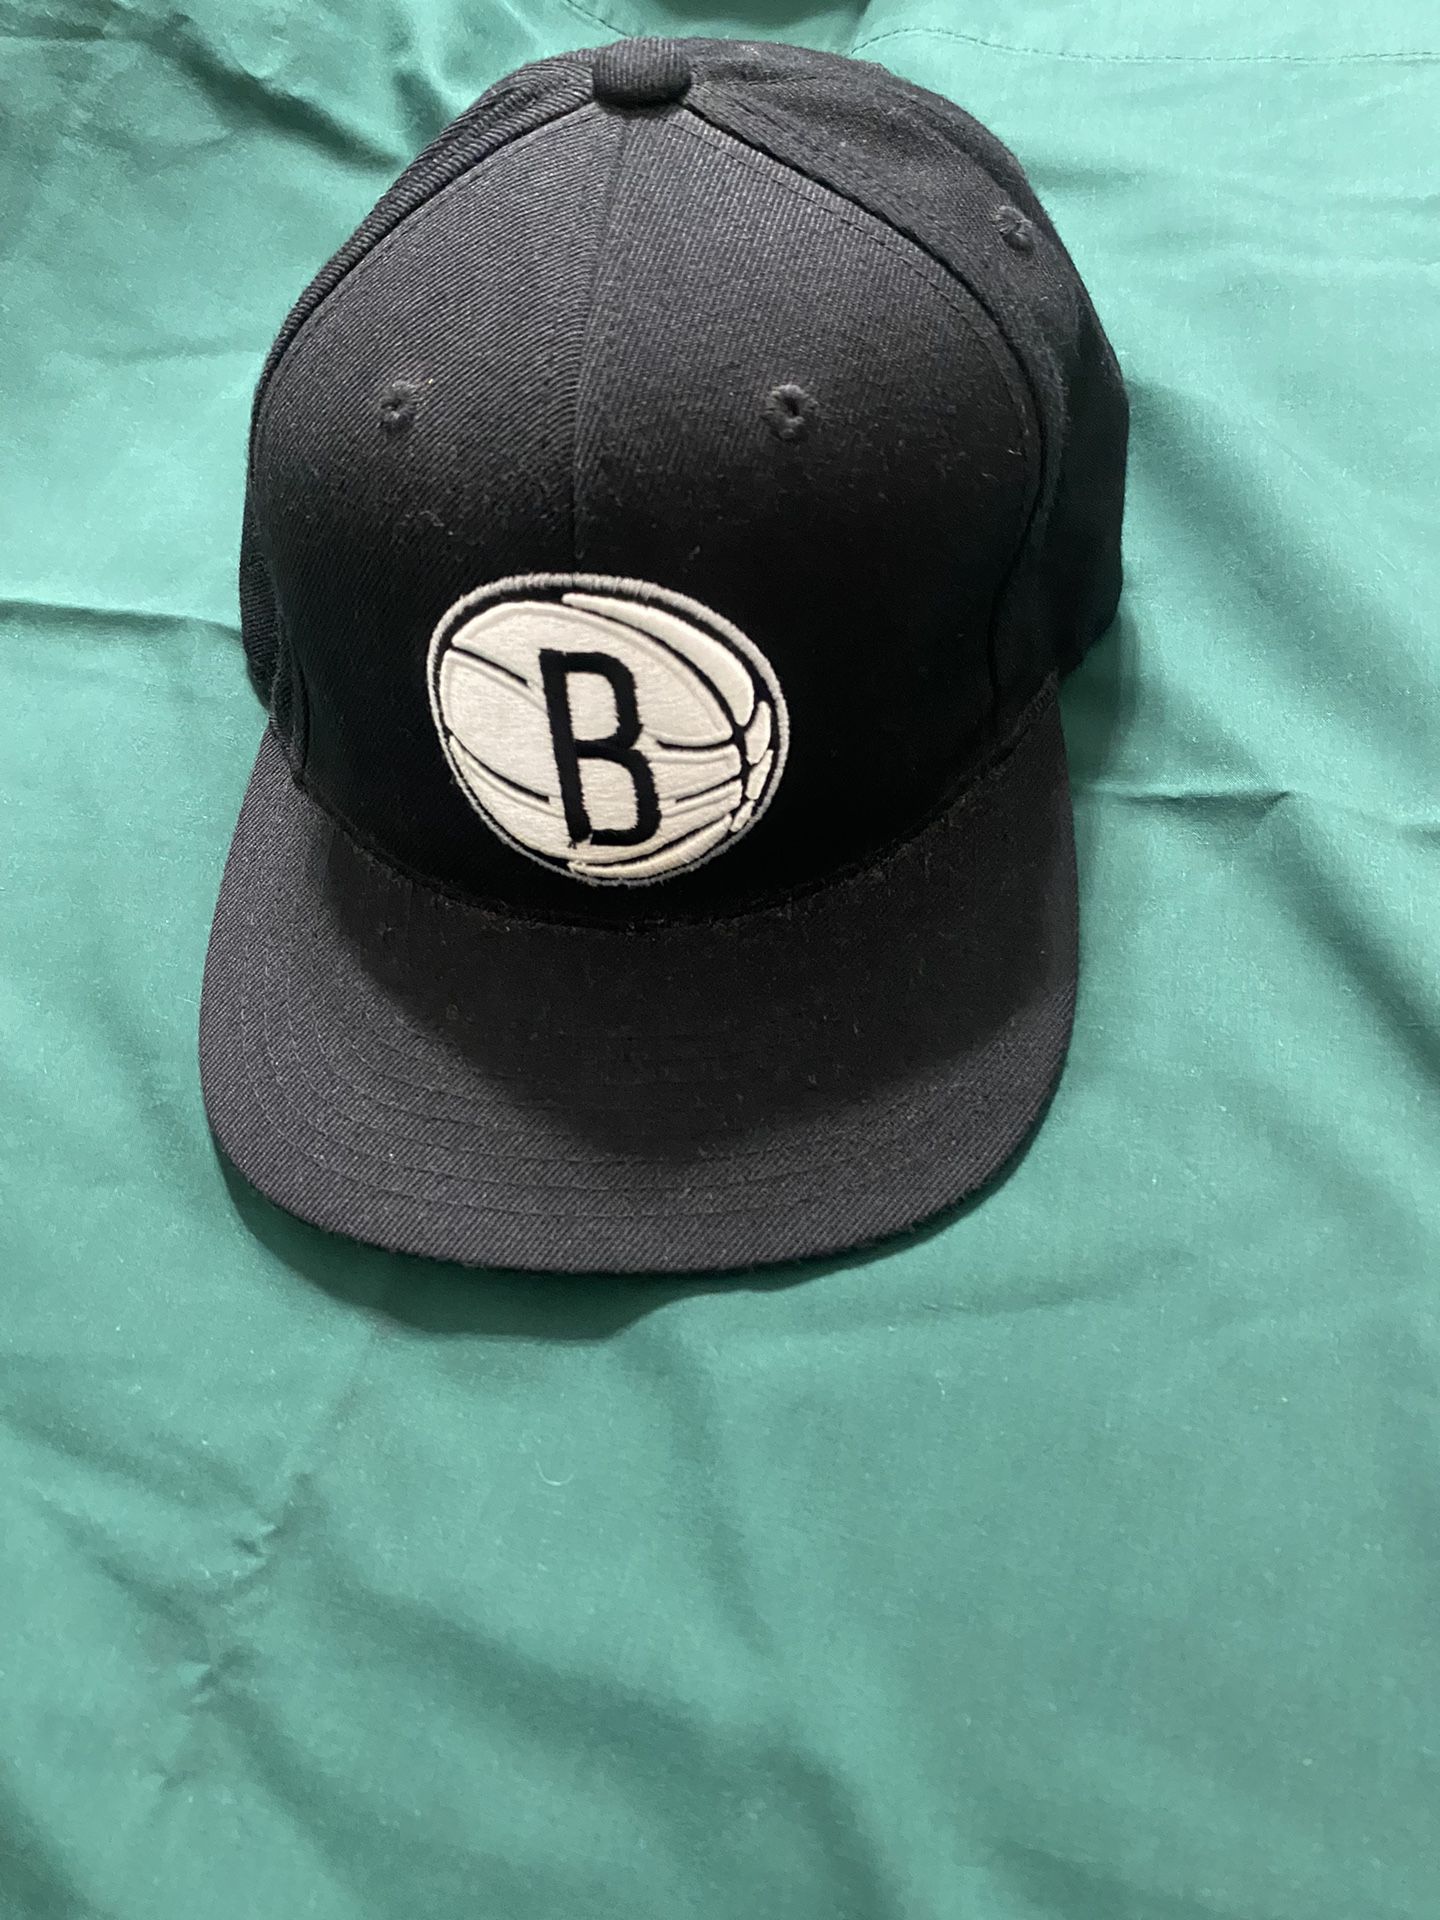 New Era SnapBack Hat $5